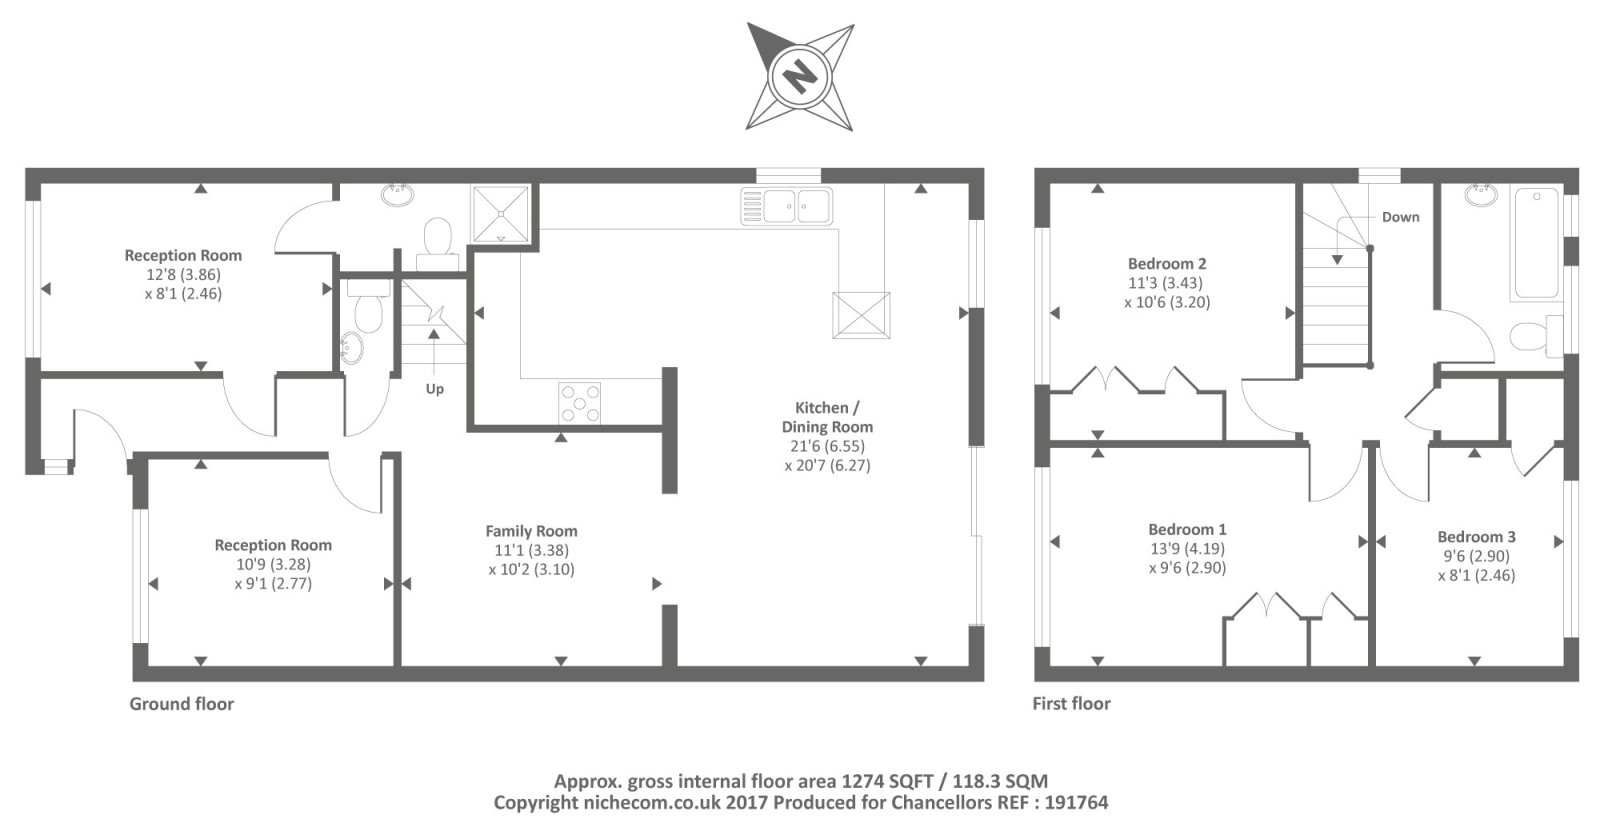 4 Bedrooms Semi-detached house to rent in Tilehurst, Reading RG30